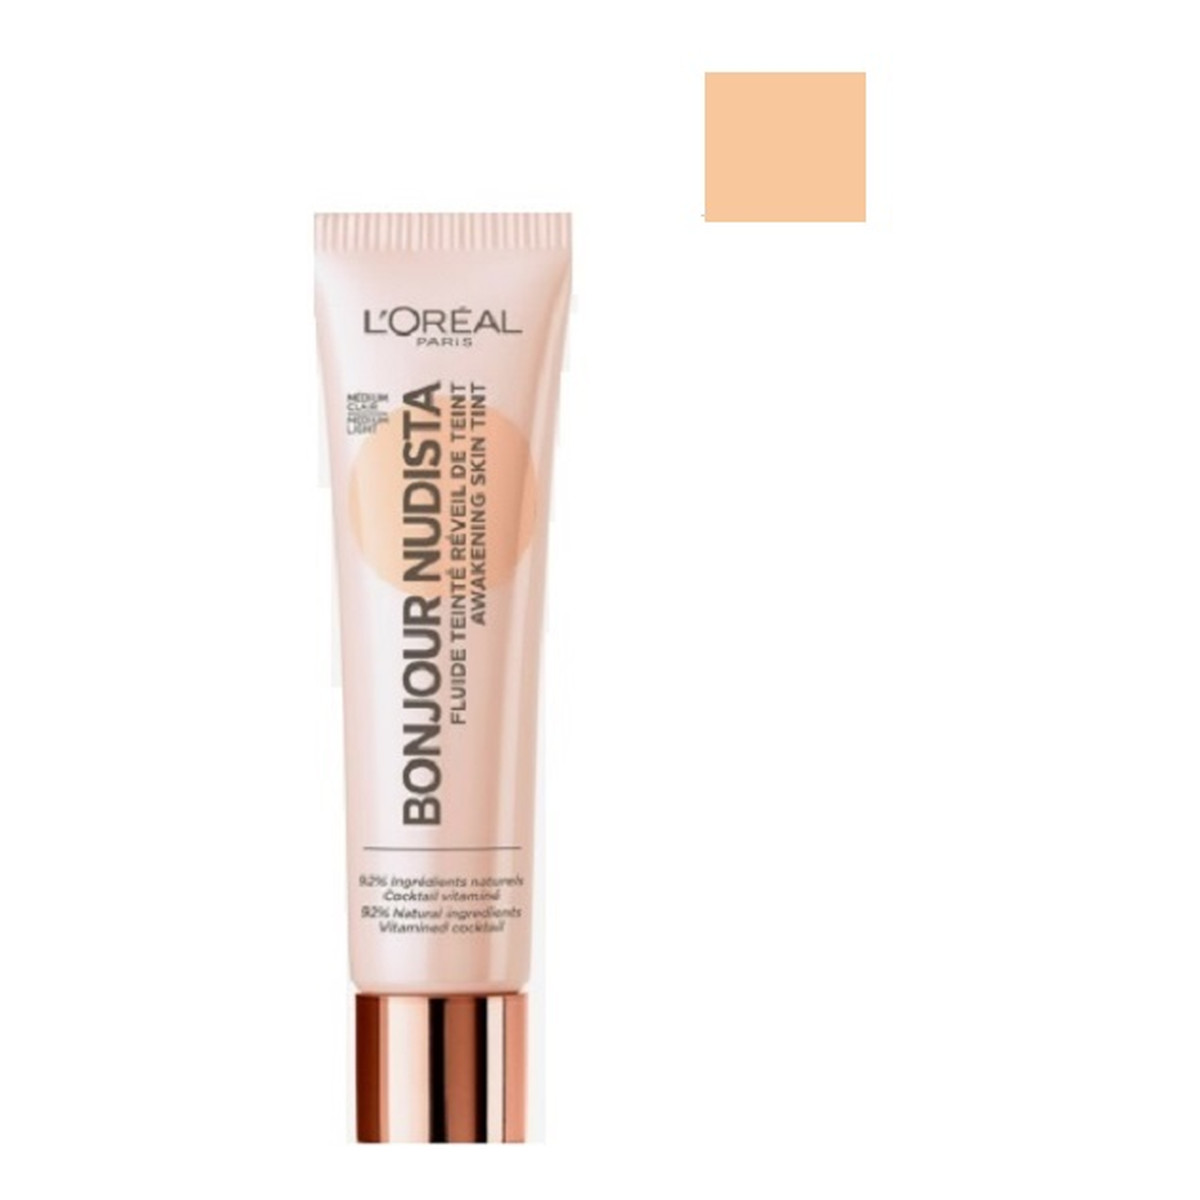 L'Oreal Paris Bonjour Nudista Awakening Skin Tint Cream kremowy podkład do twarzy 30ml